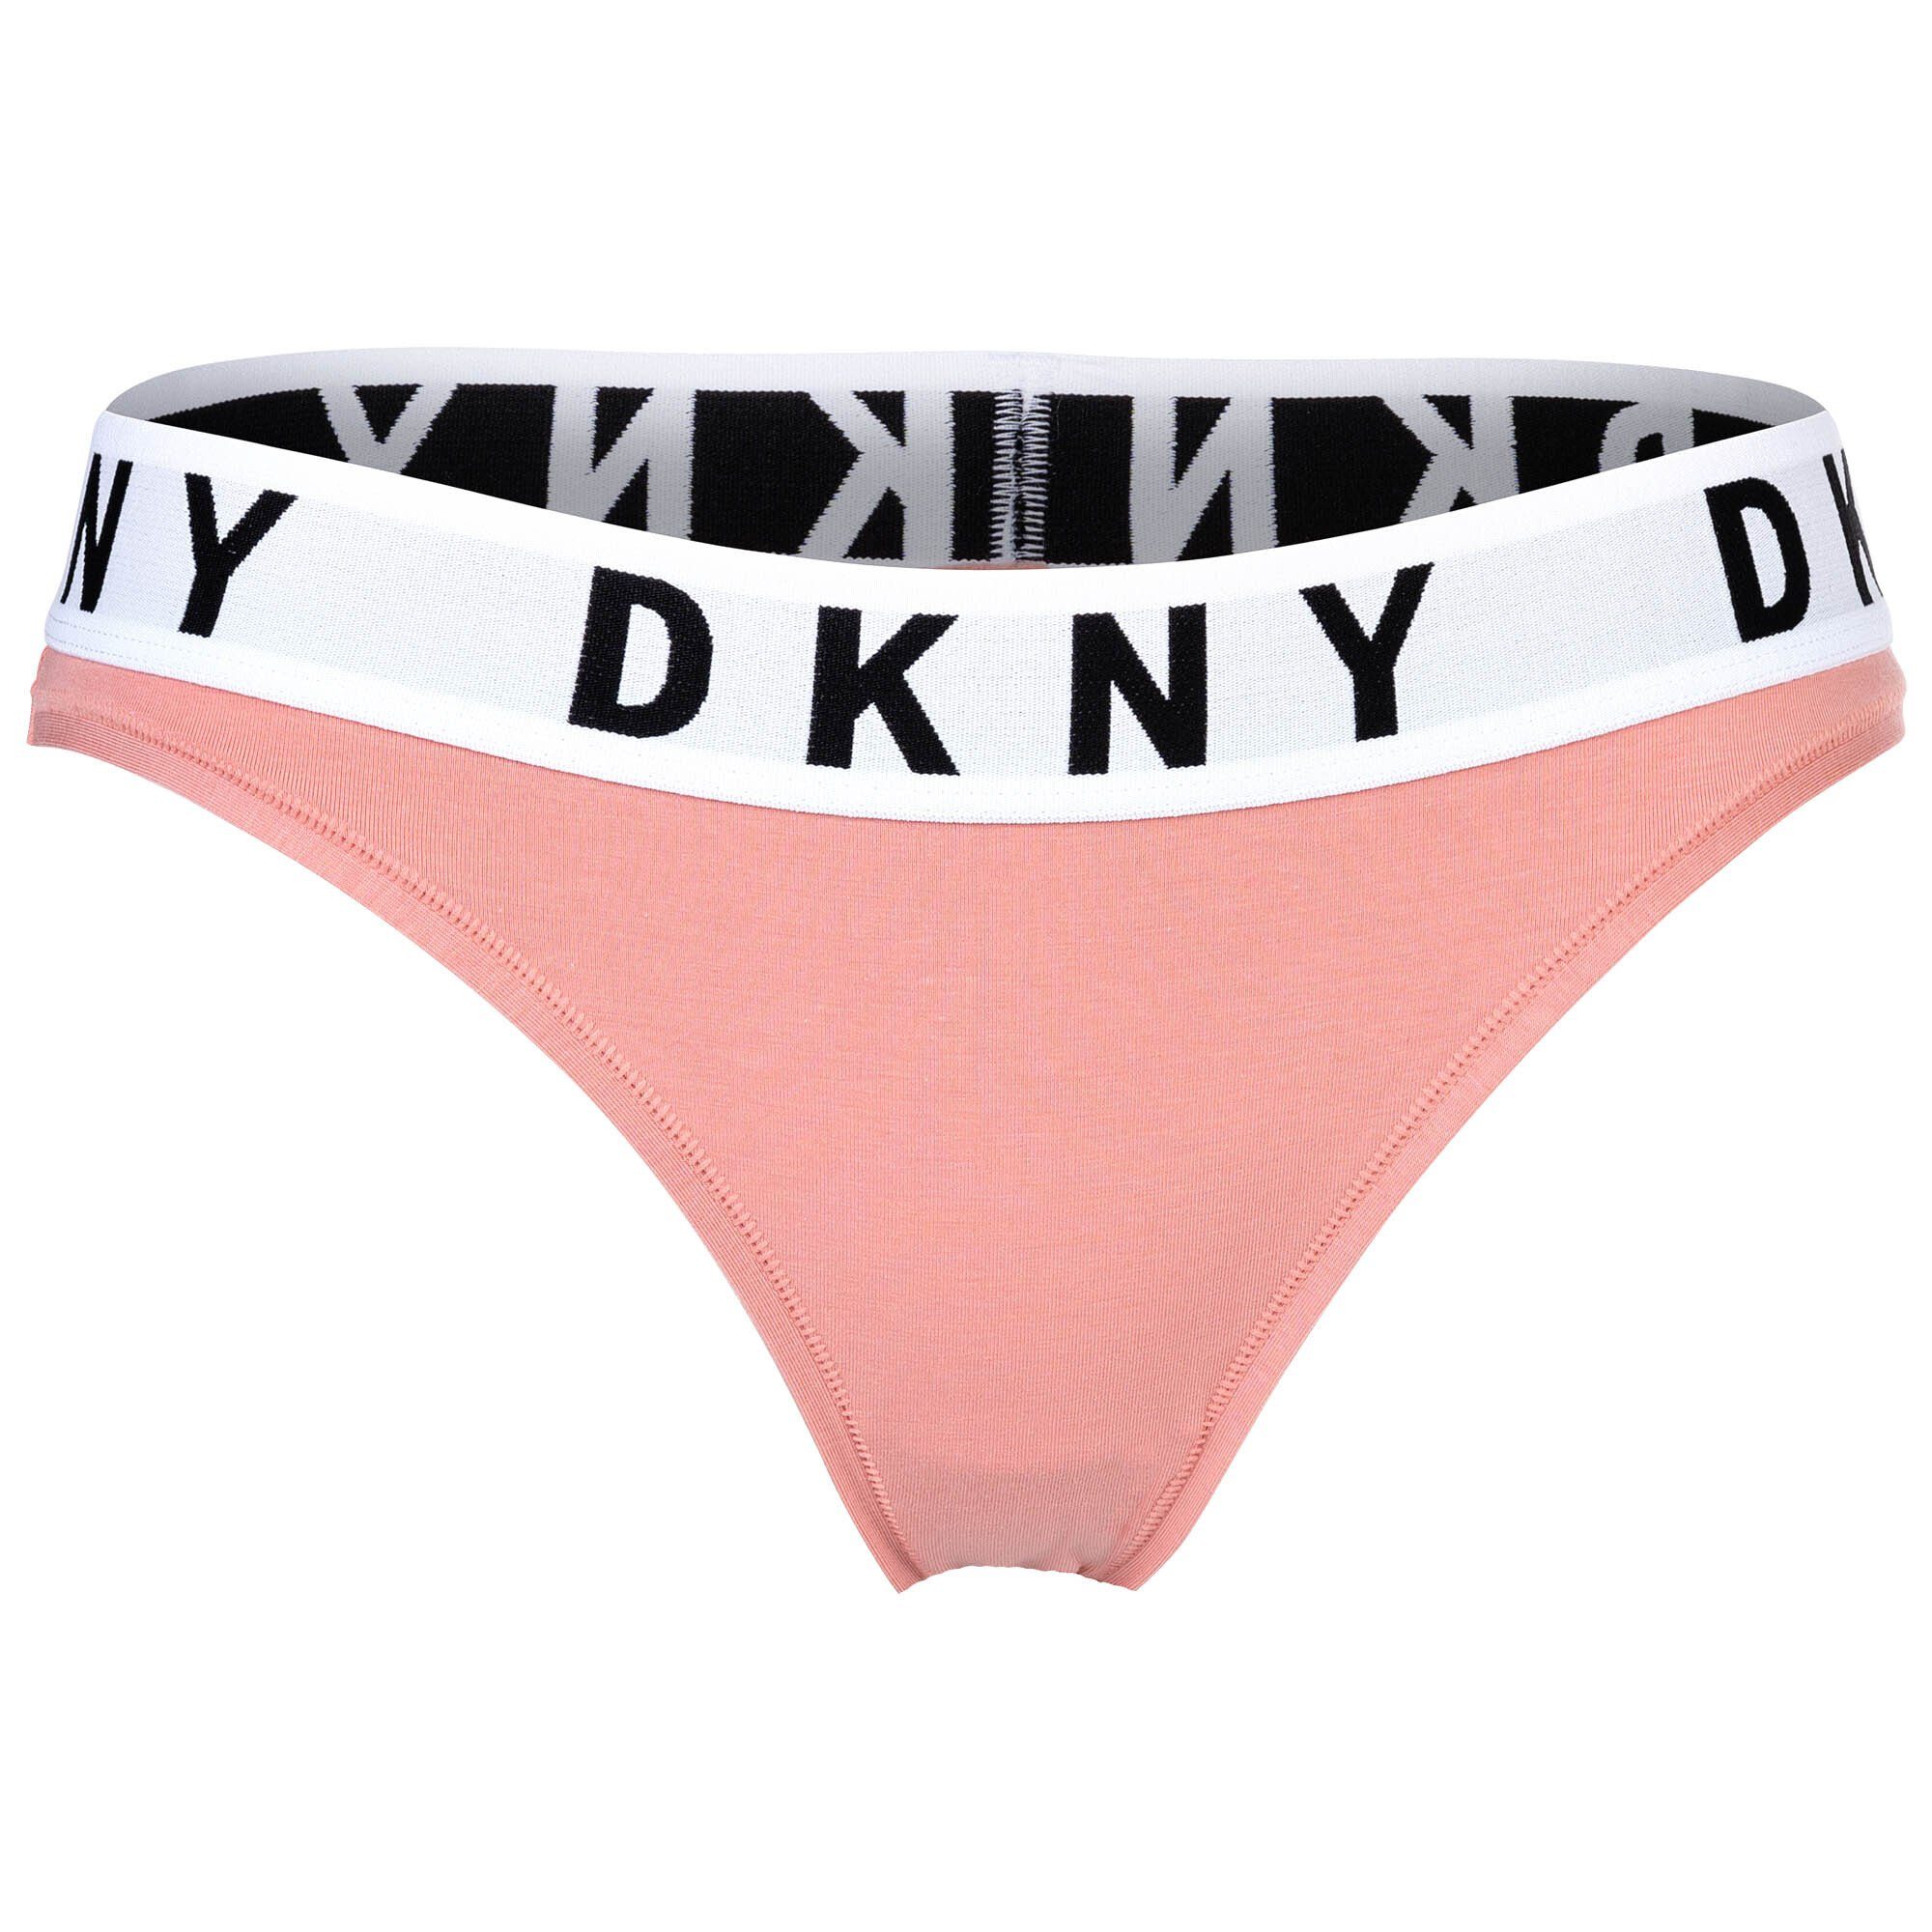 DKNY Panty Cotton Damen Stretch - Modal Brief, Slip Altrosa